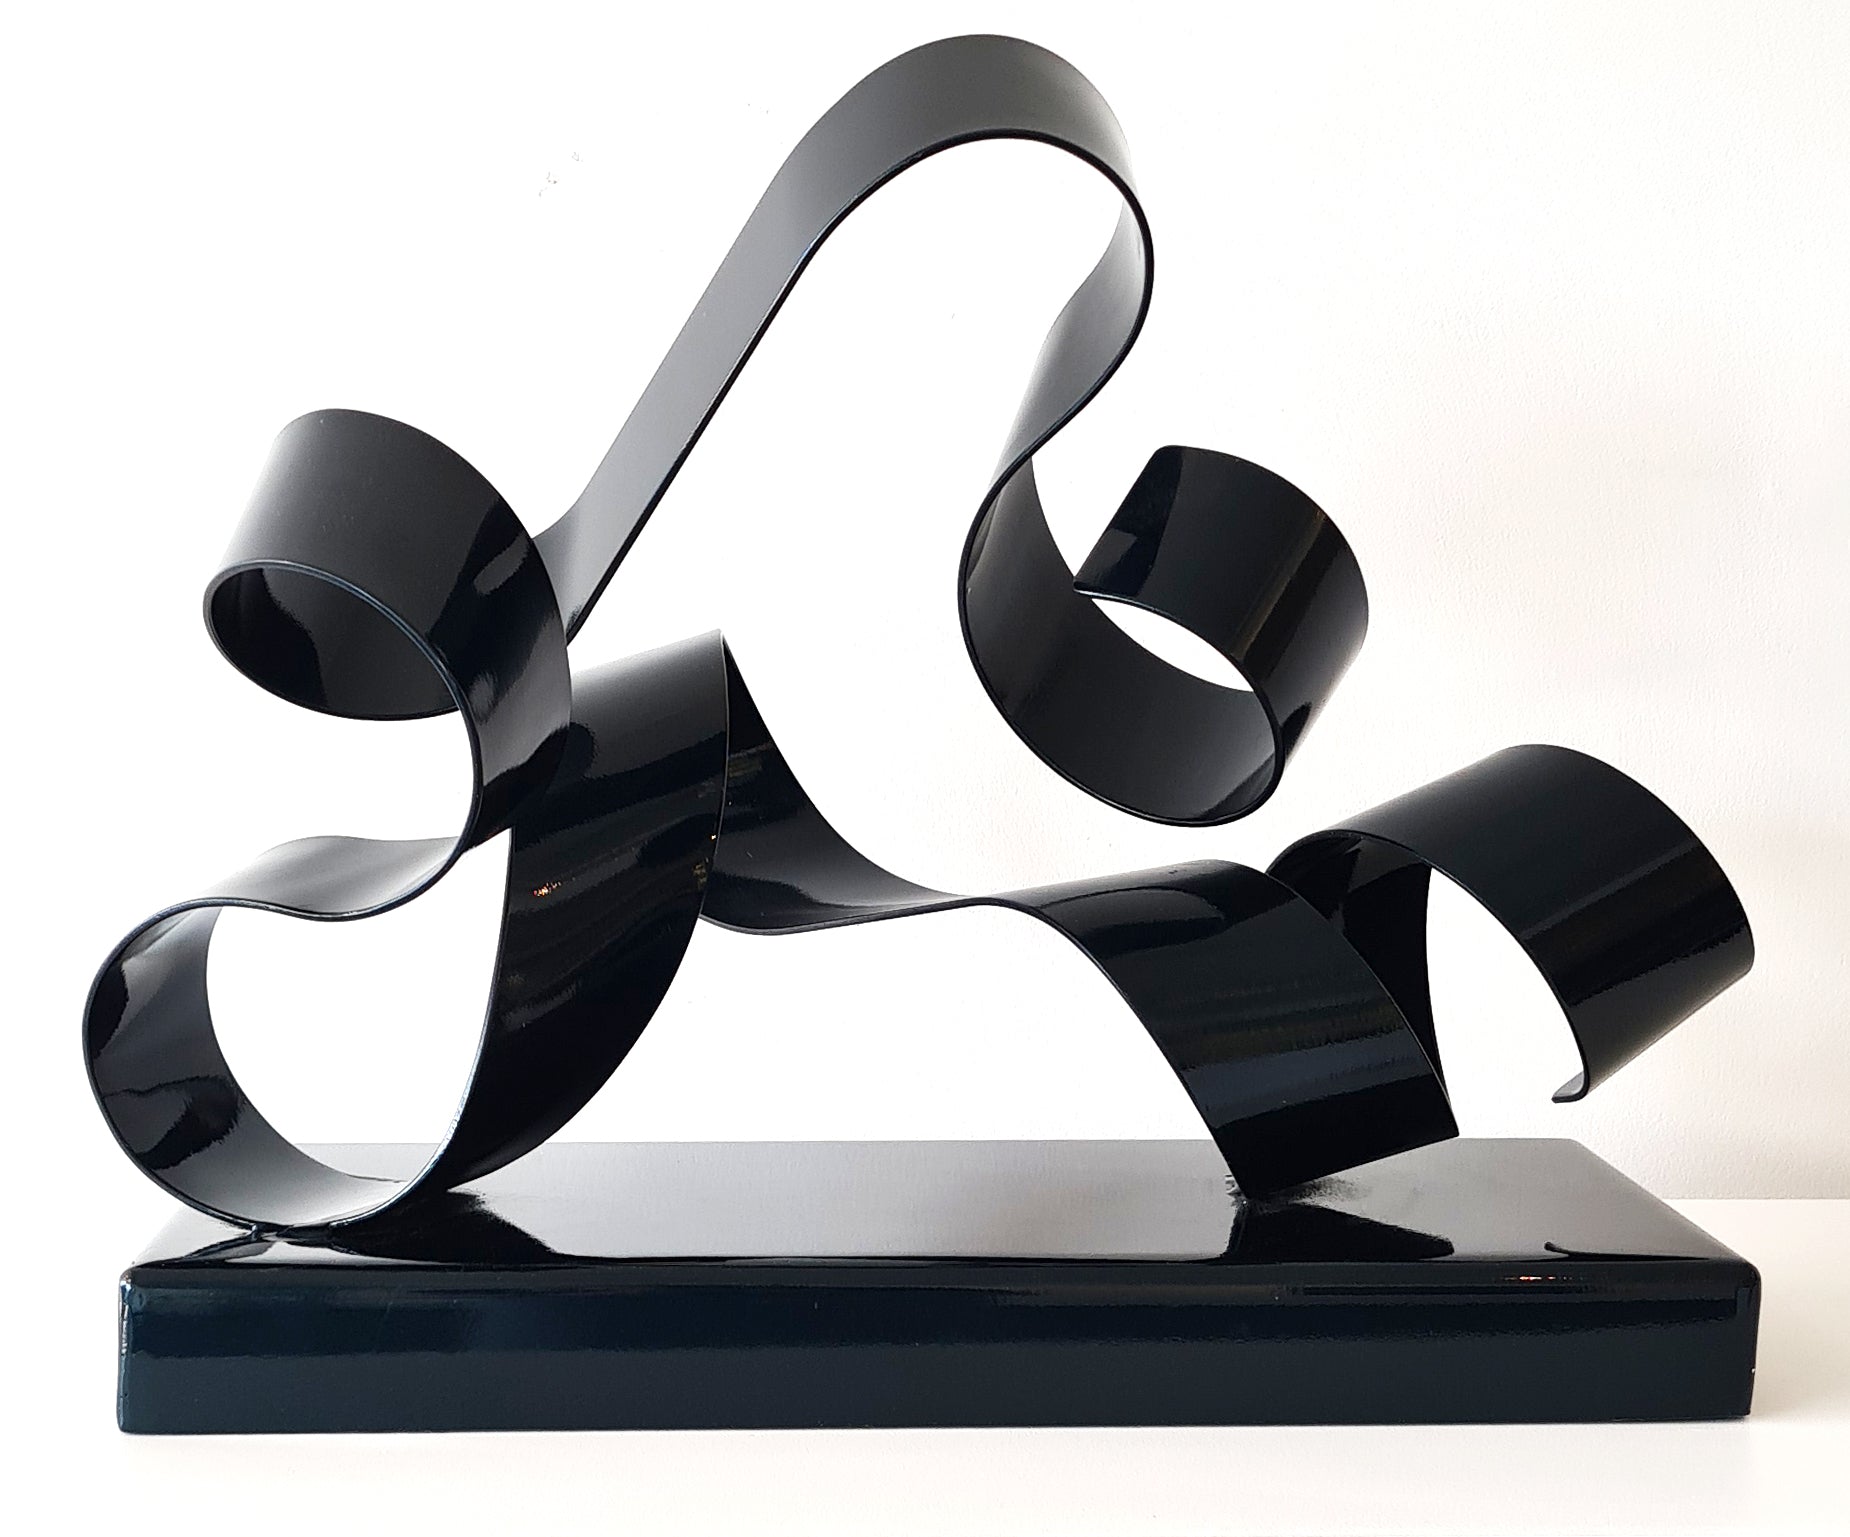 Steel sculpture by New Zealand Artist Kiya Nancarrow